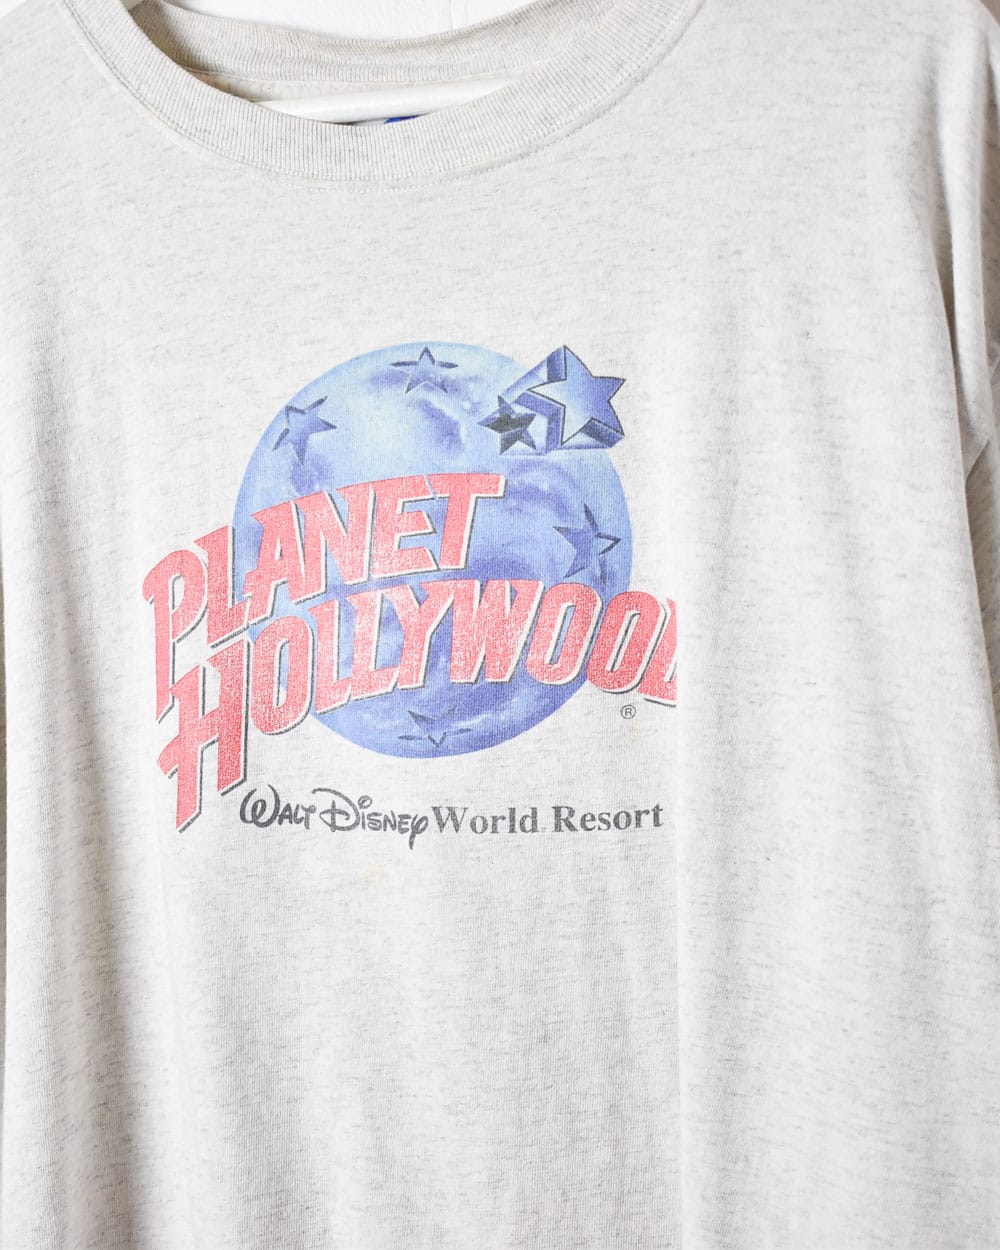 Stone Planet Hollywood Walt Disney World Resort T-Shirt - Medium